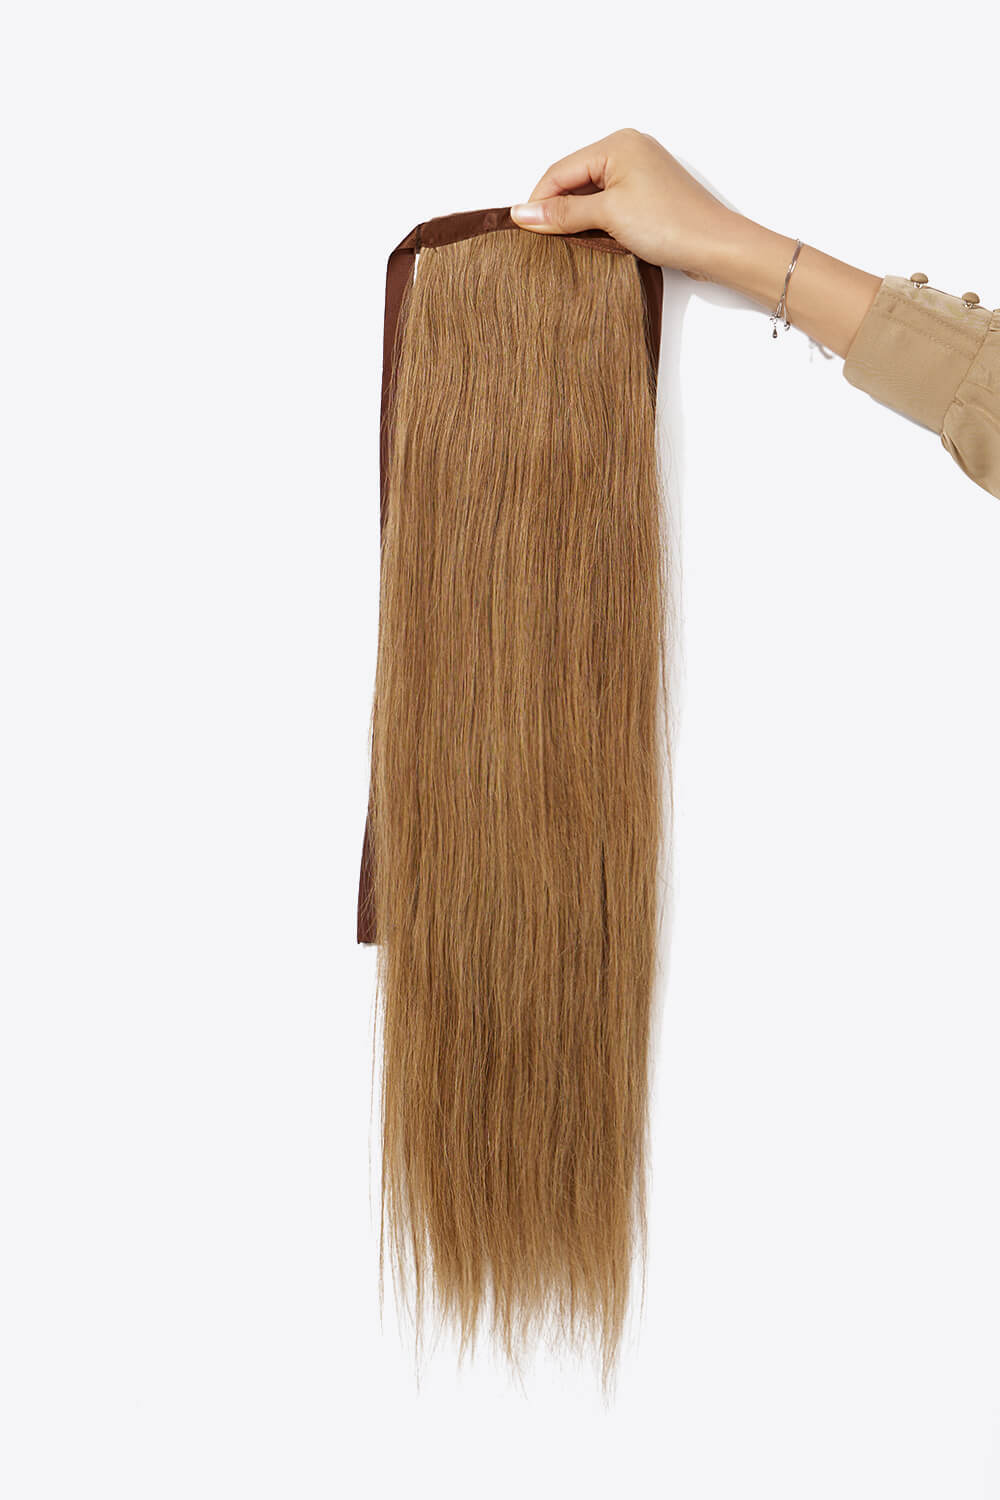 24" 130g #10 Ponytail Straight Human Hair - AllIn Computer